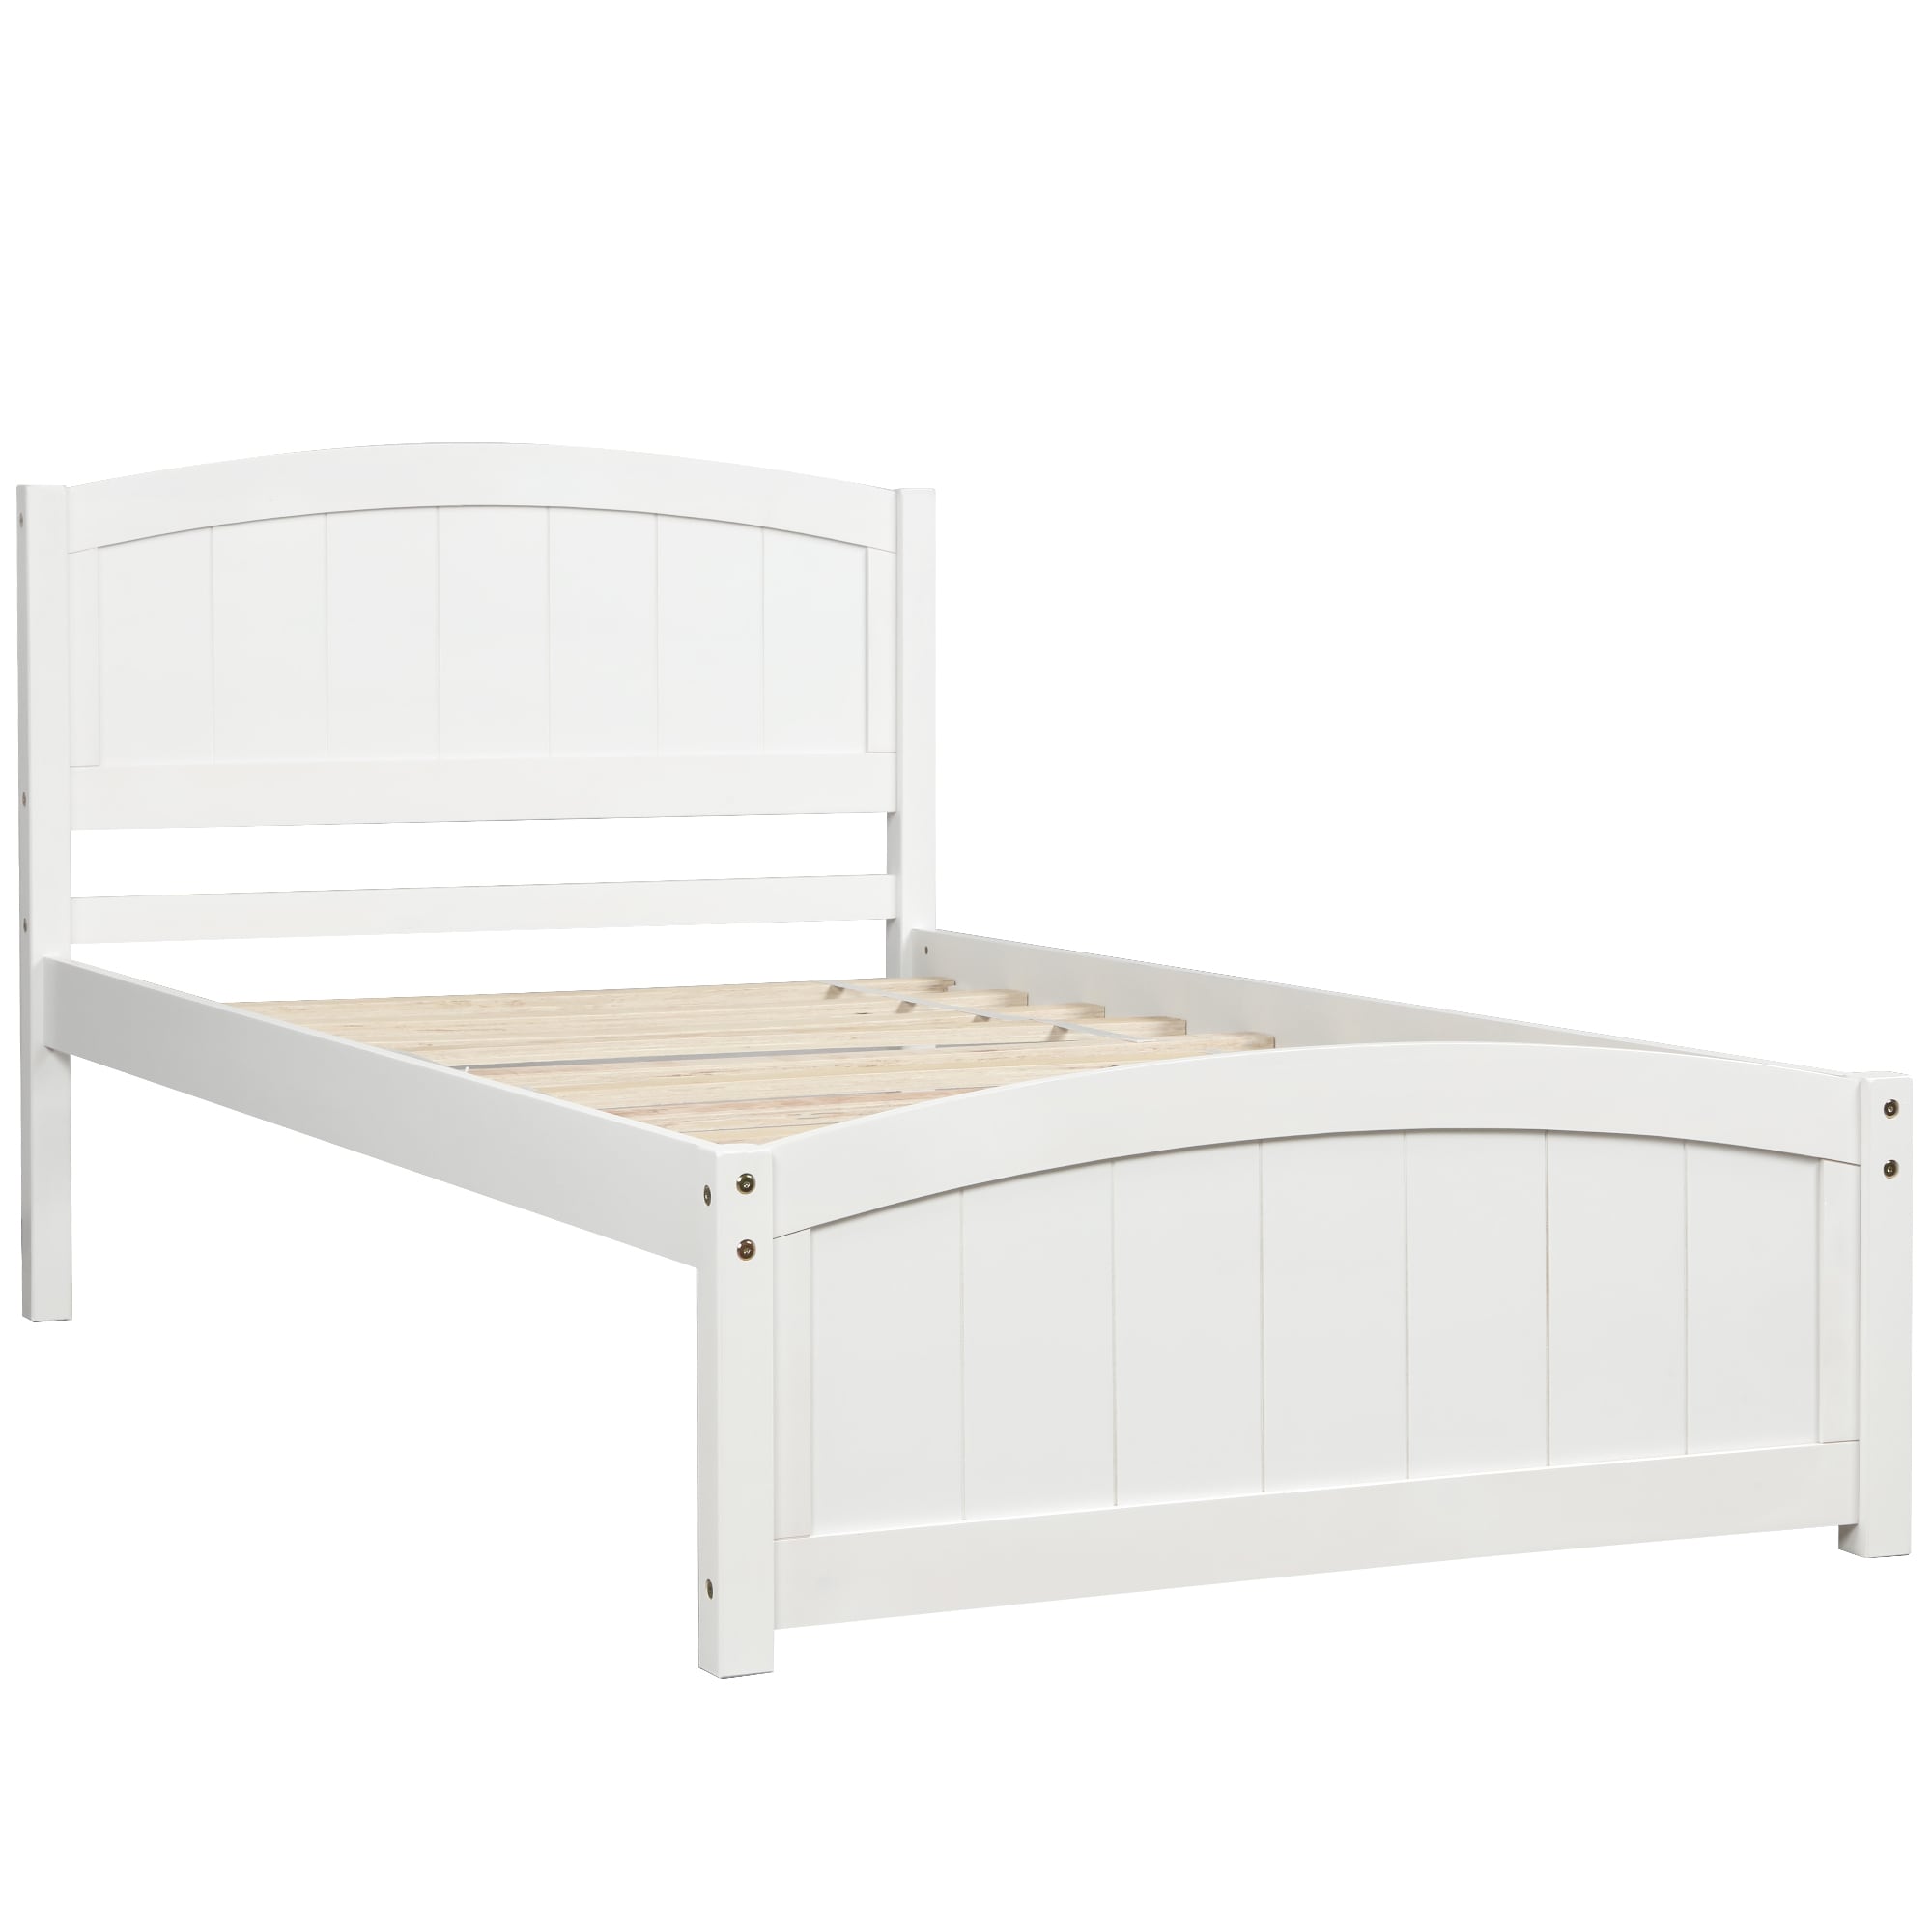 Casainc Wood Platform Bed White Twin, White Twin Platform Bed